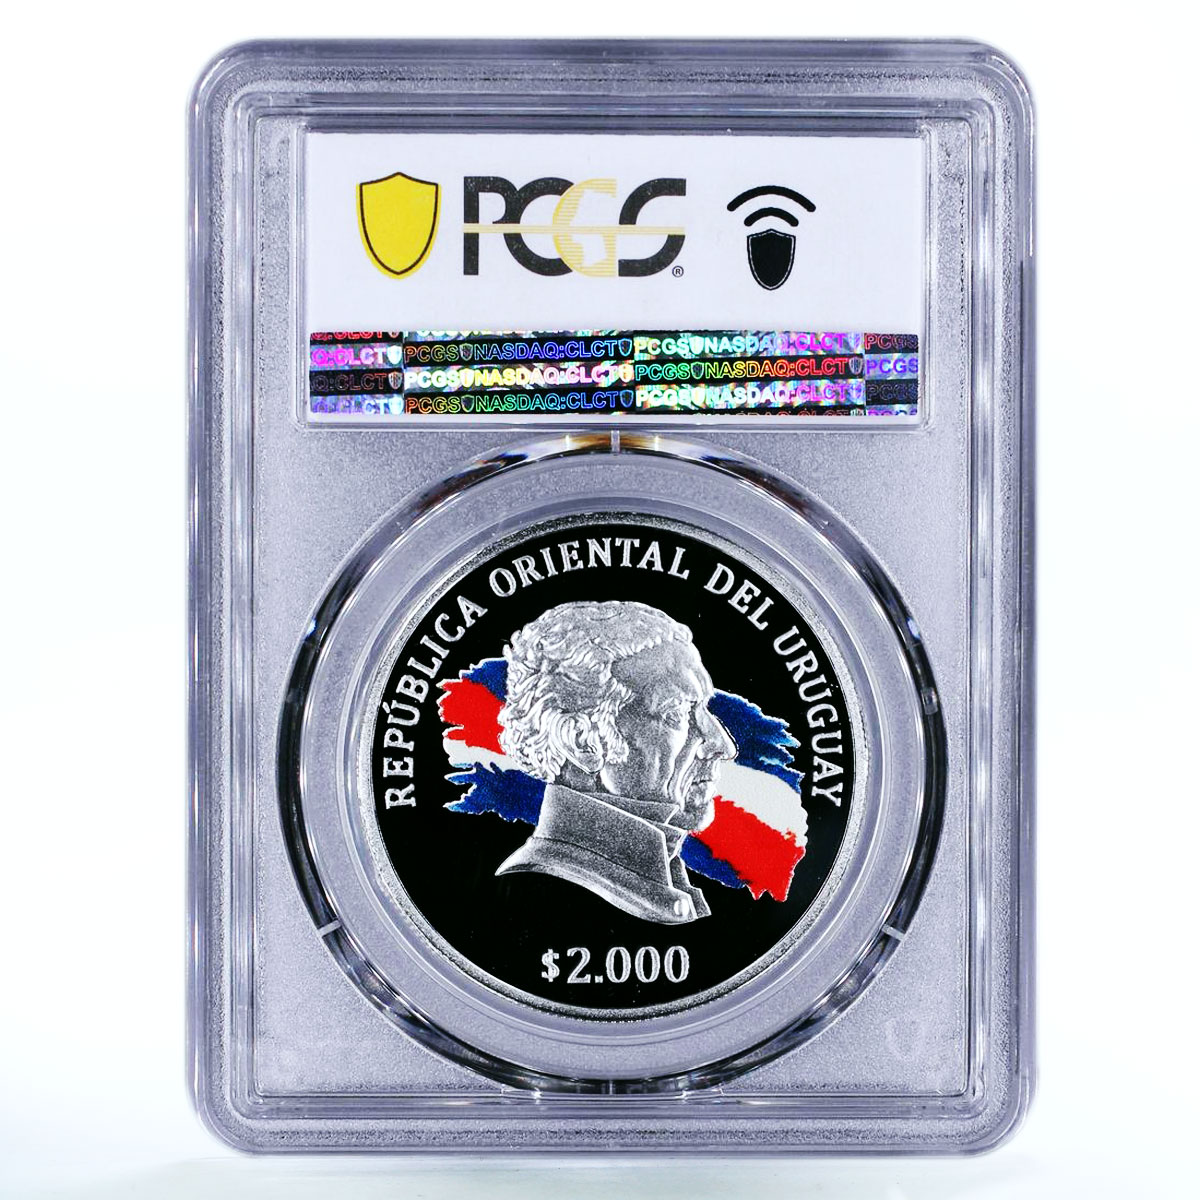 Uruguay 2000 pesos Bicentenary of Land Regulation PR70 PCGS silver coin 2015